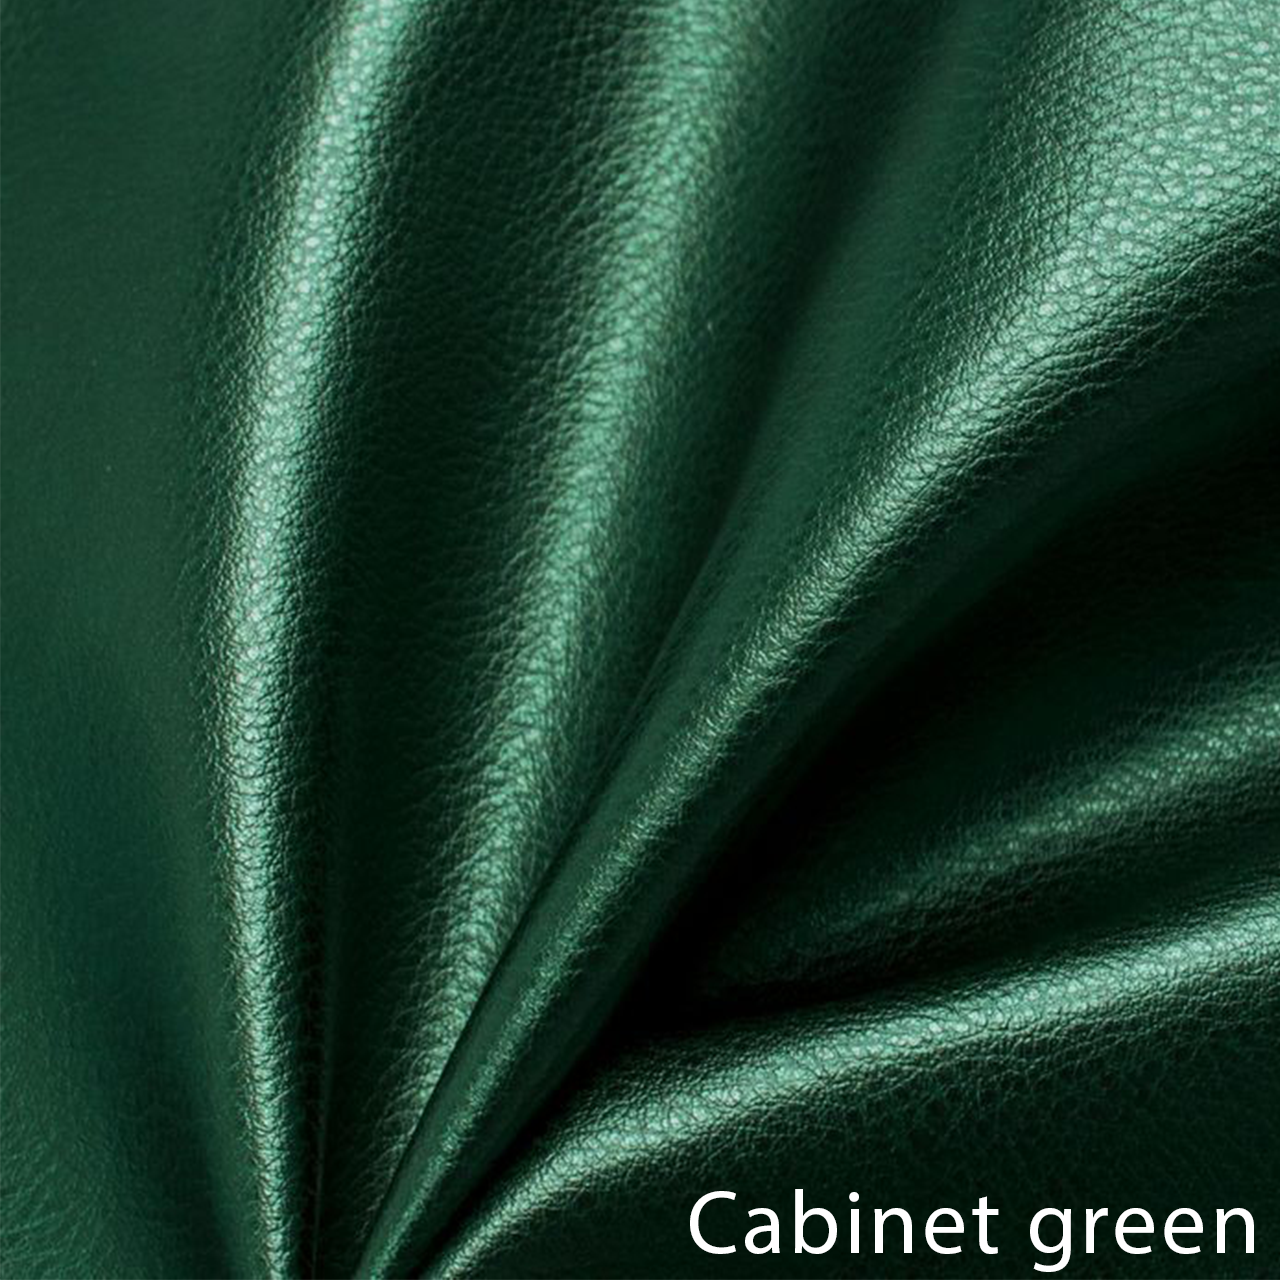 Cabinet green